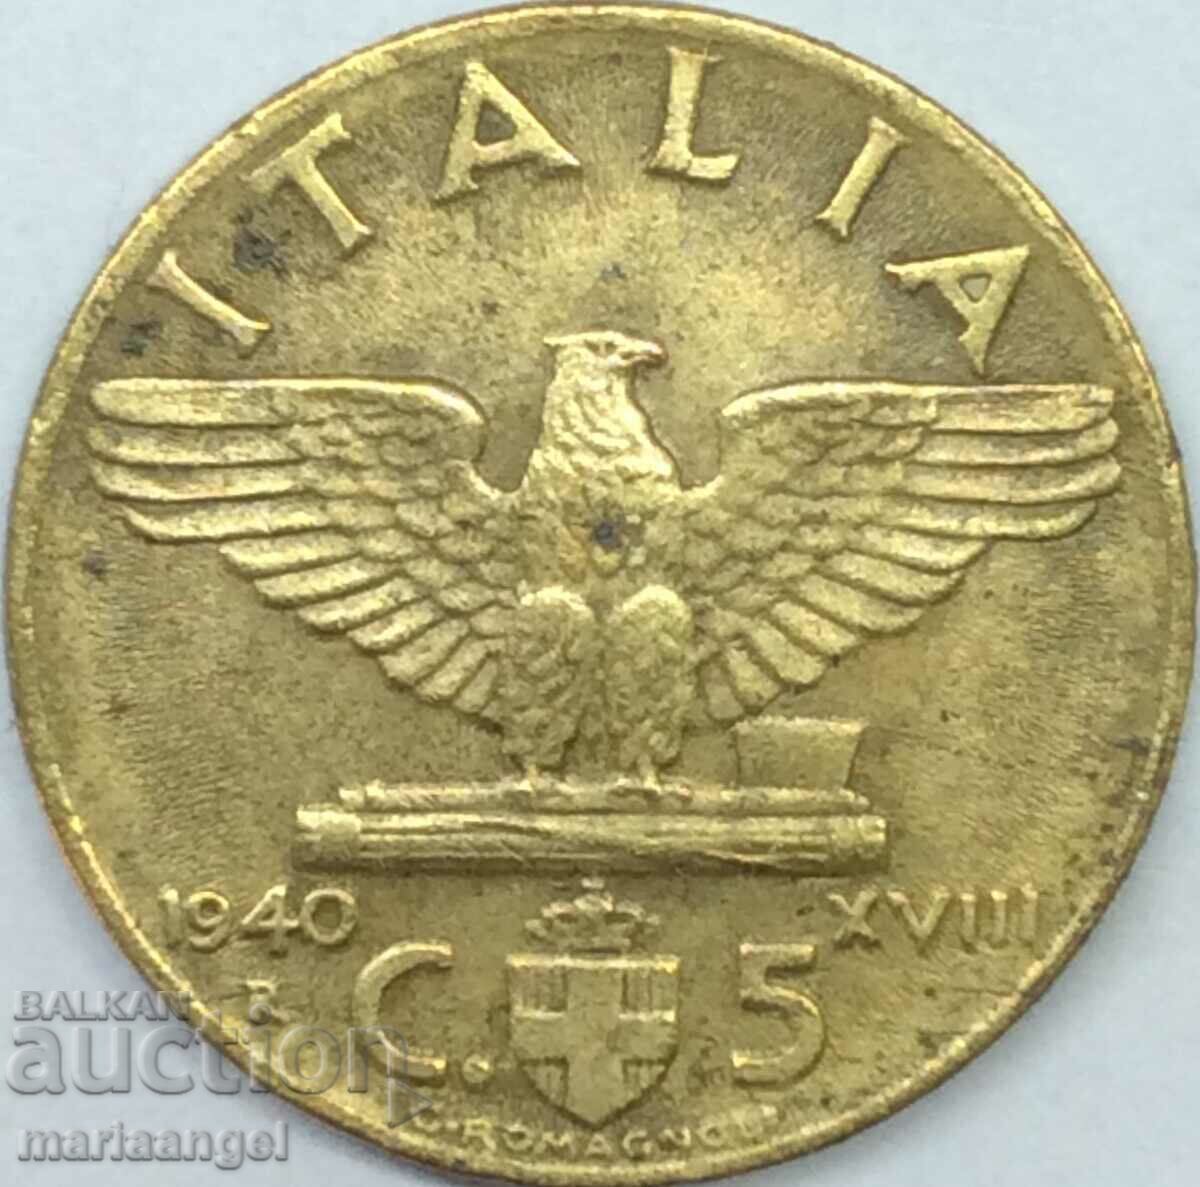 5 centesimi 1940 Italy Eagle brass